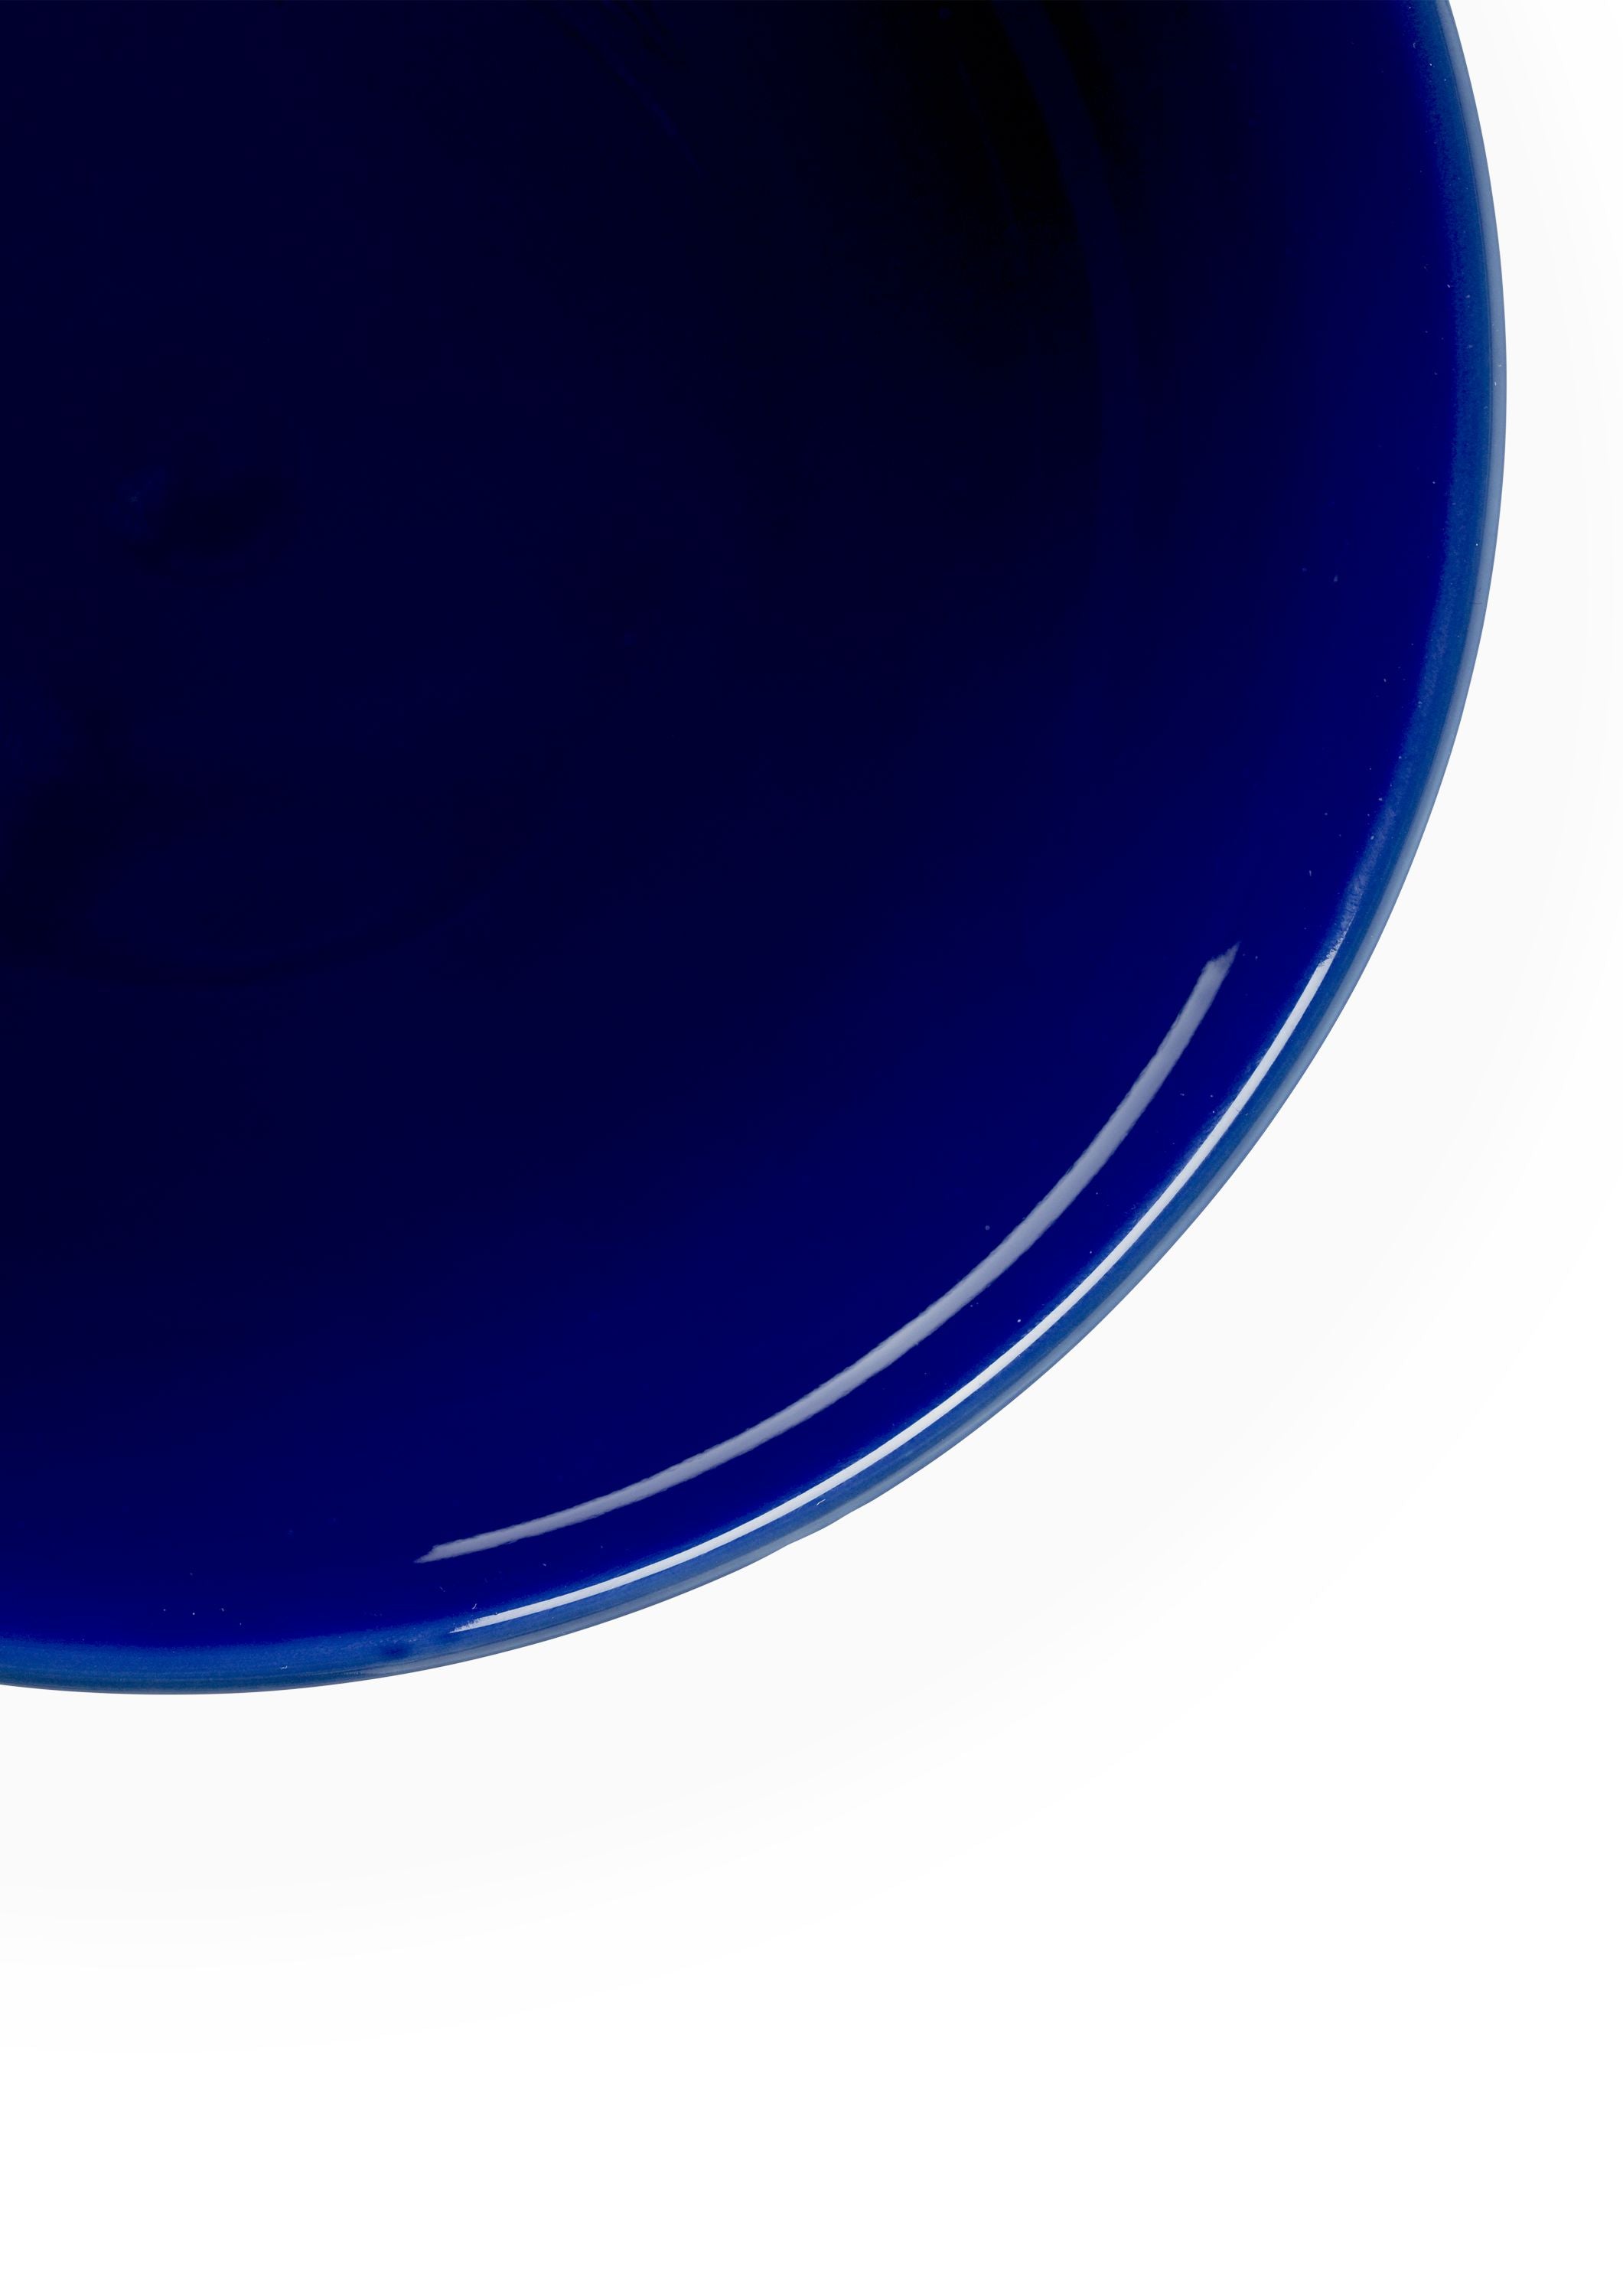 Lyngby Porcelæn Rhombe Farbschale Ø15.5 cm, dunkelblau